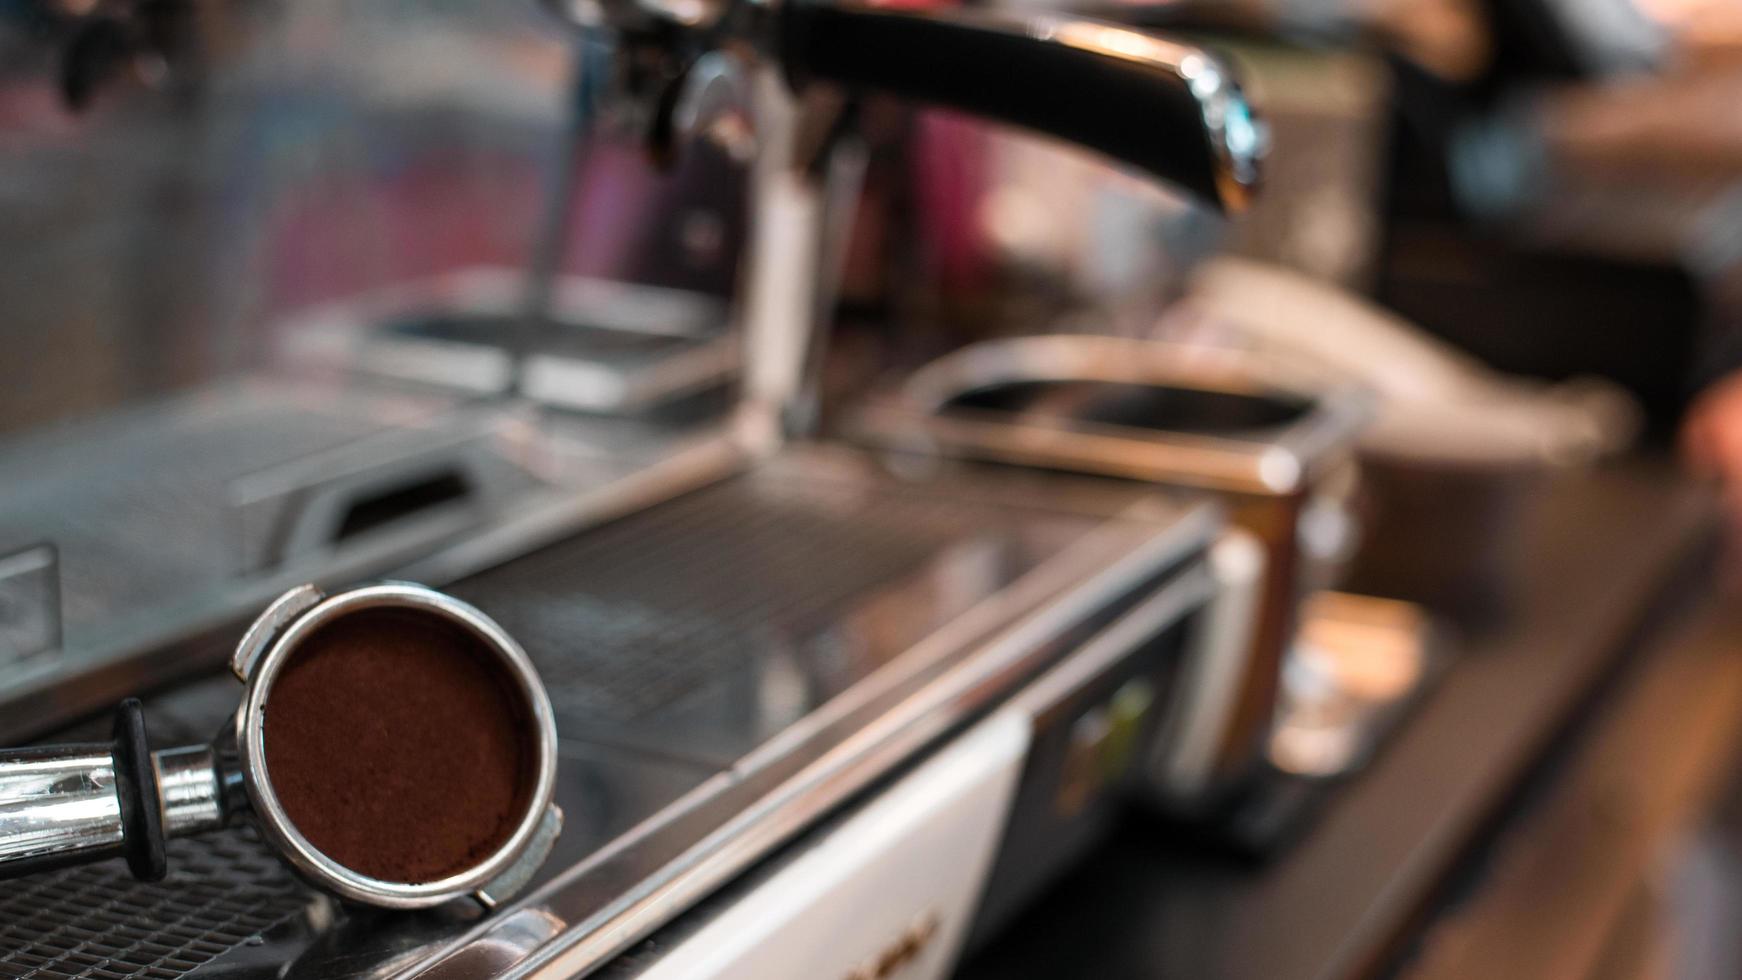 kaffeavfall på en kaffemaskin foto